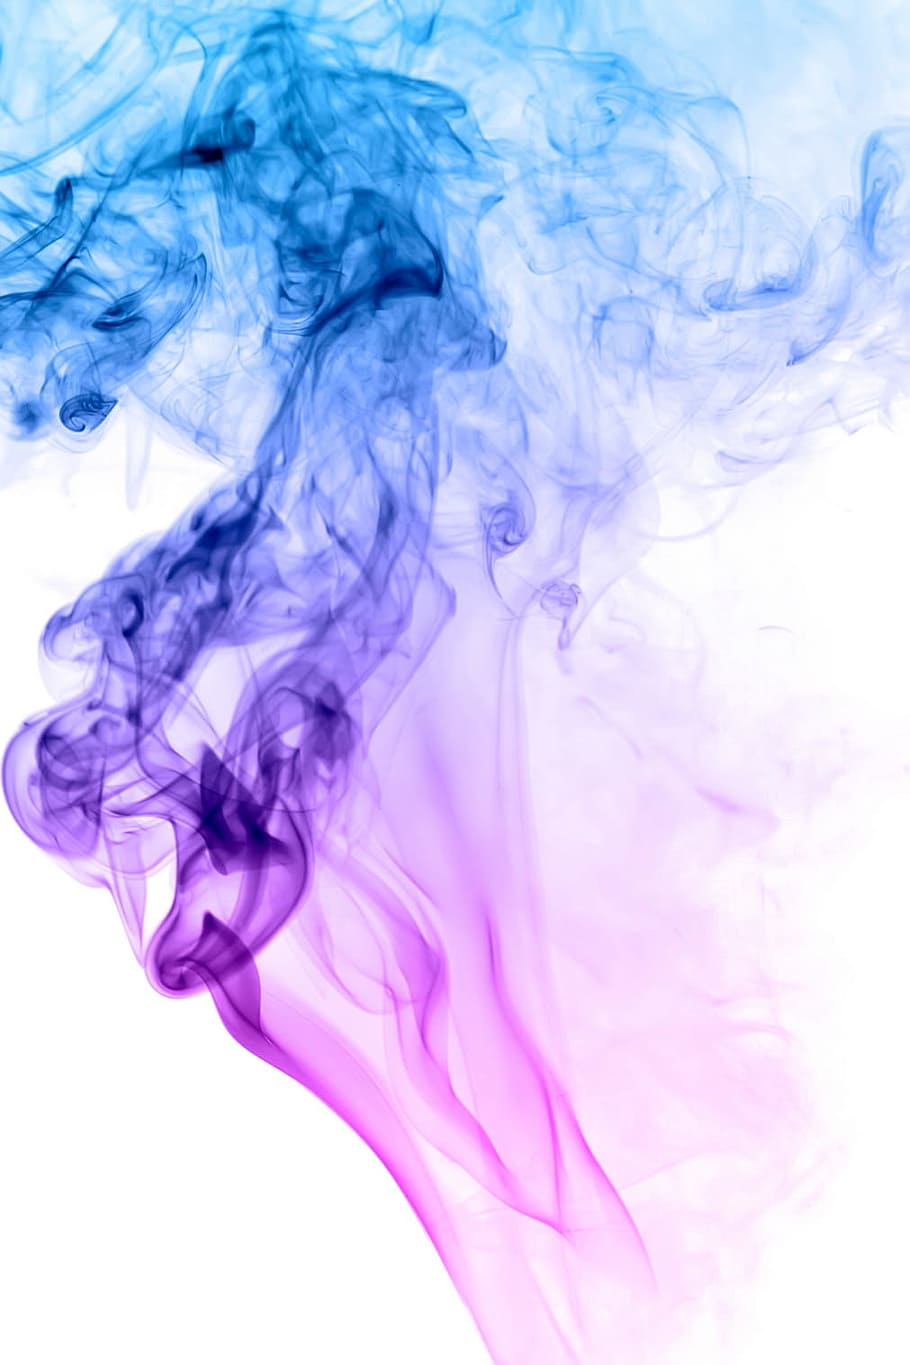 abstrato, aromaterapia, plano de fundo, cor, cheiro, fumaça, movimento, agua, fumaça - estrutura física, redemoinho